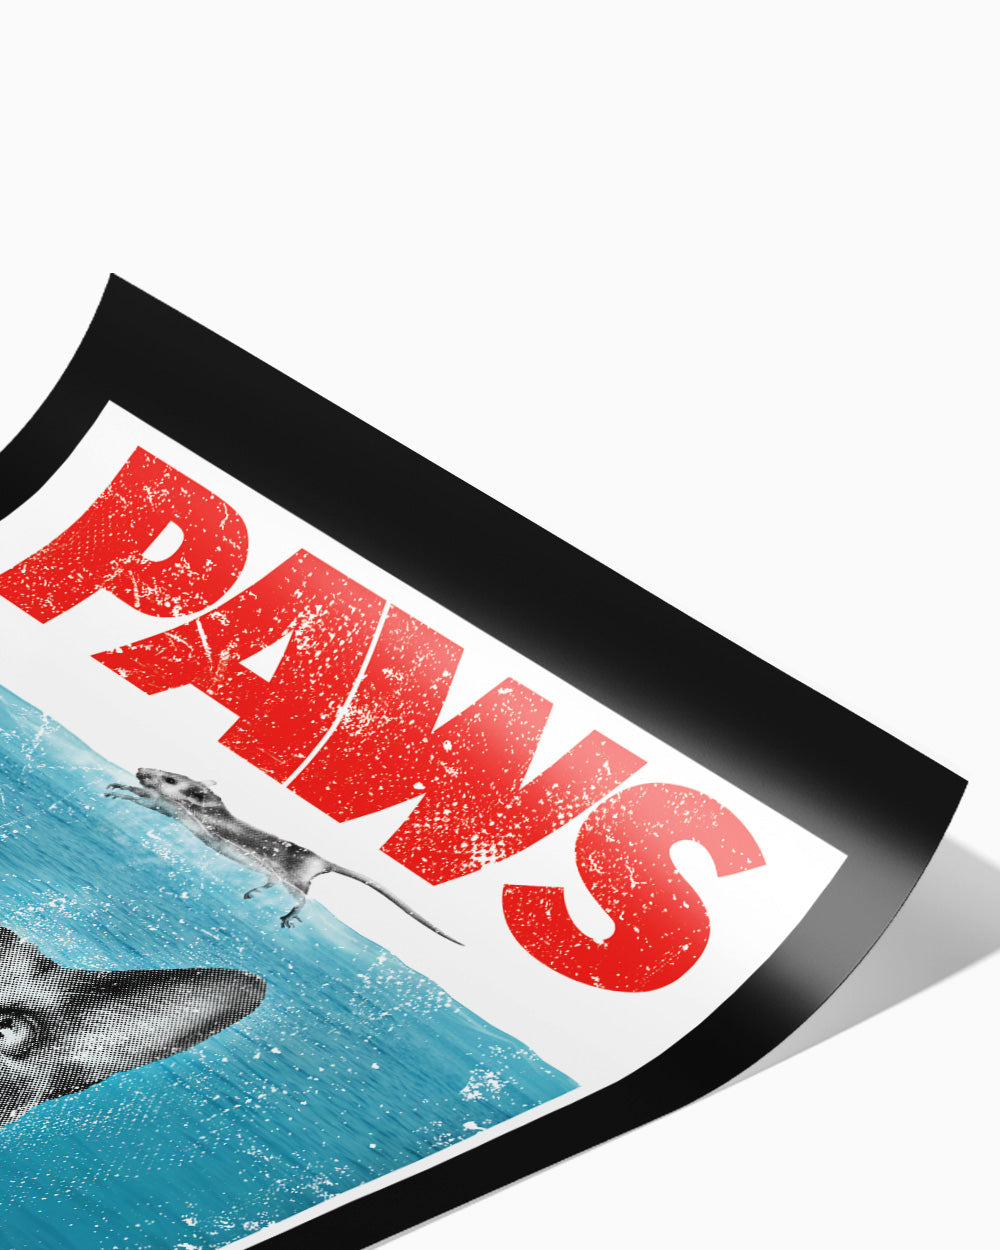 Paws Cat Tote Bag Australia Online